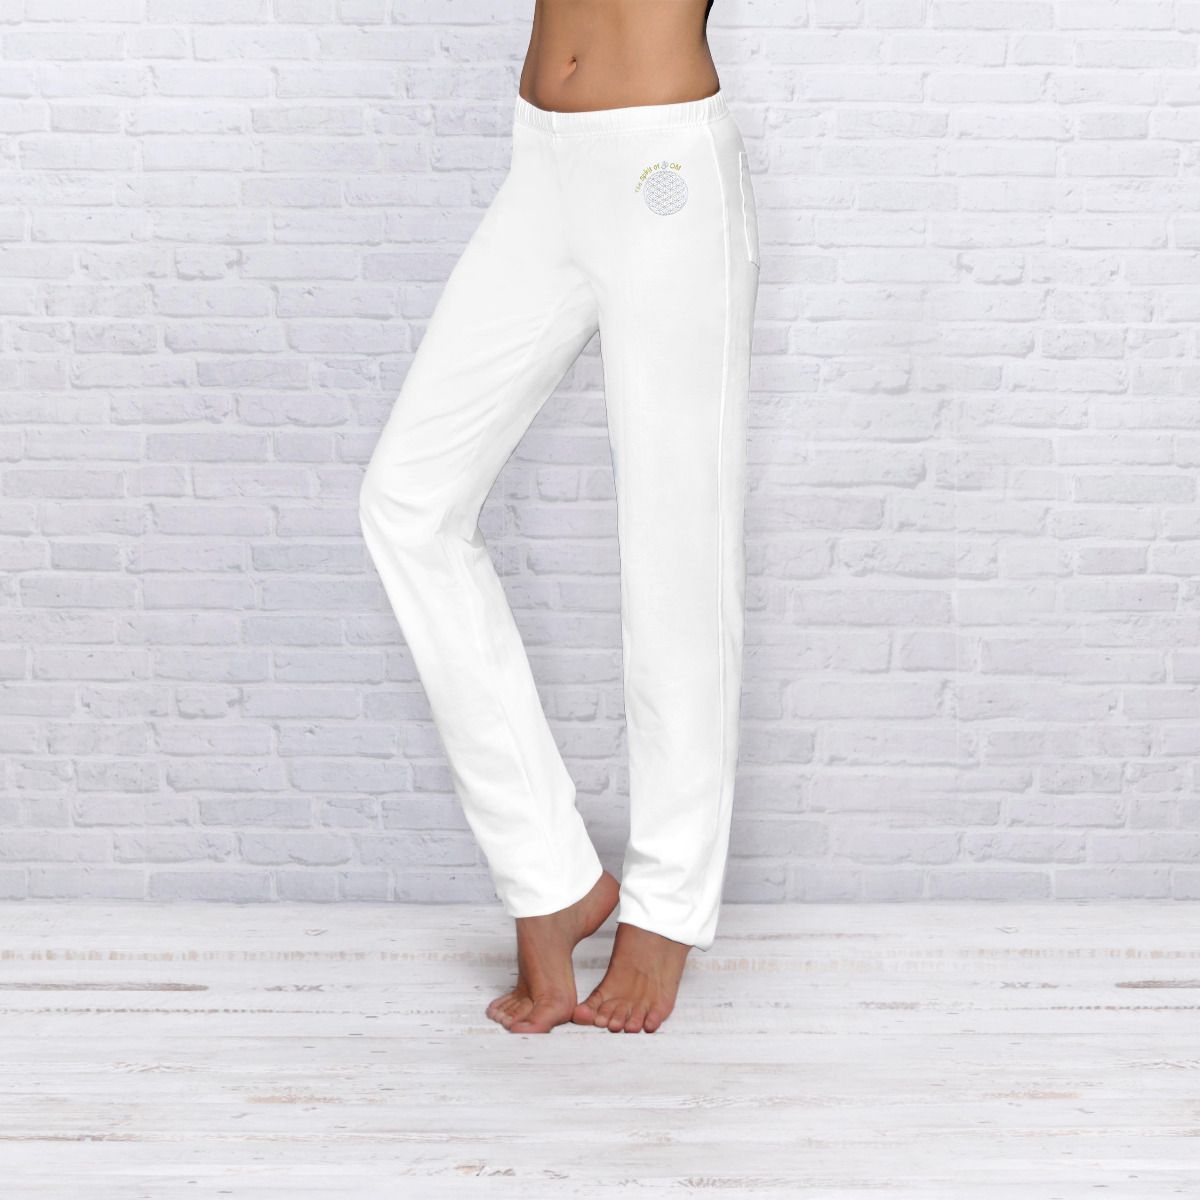 The Spirit of OM wellness kalhoty z bio bavlny dlouhé unisex - bílé Velikost: XL